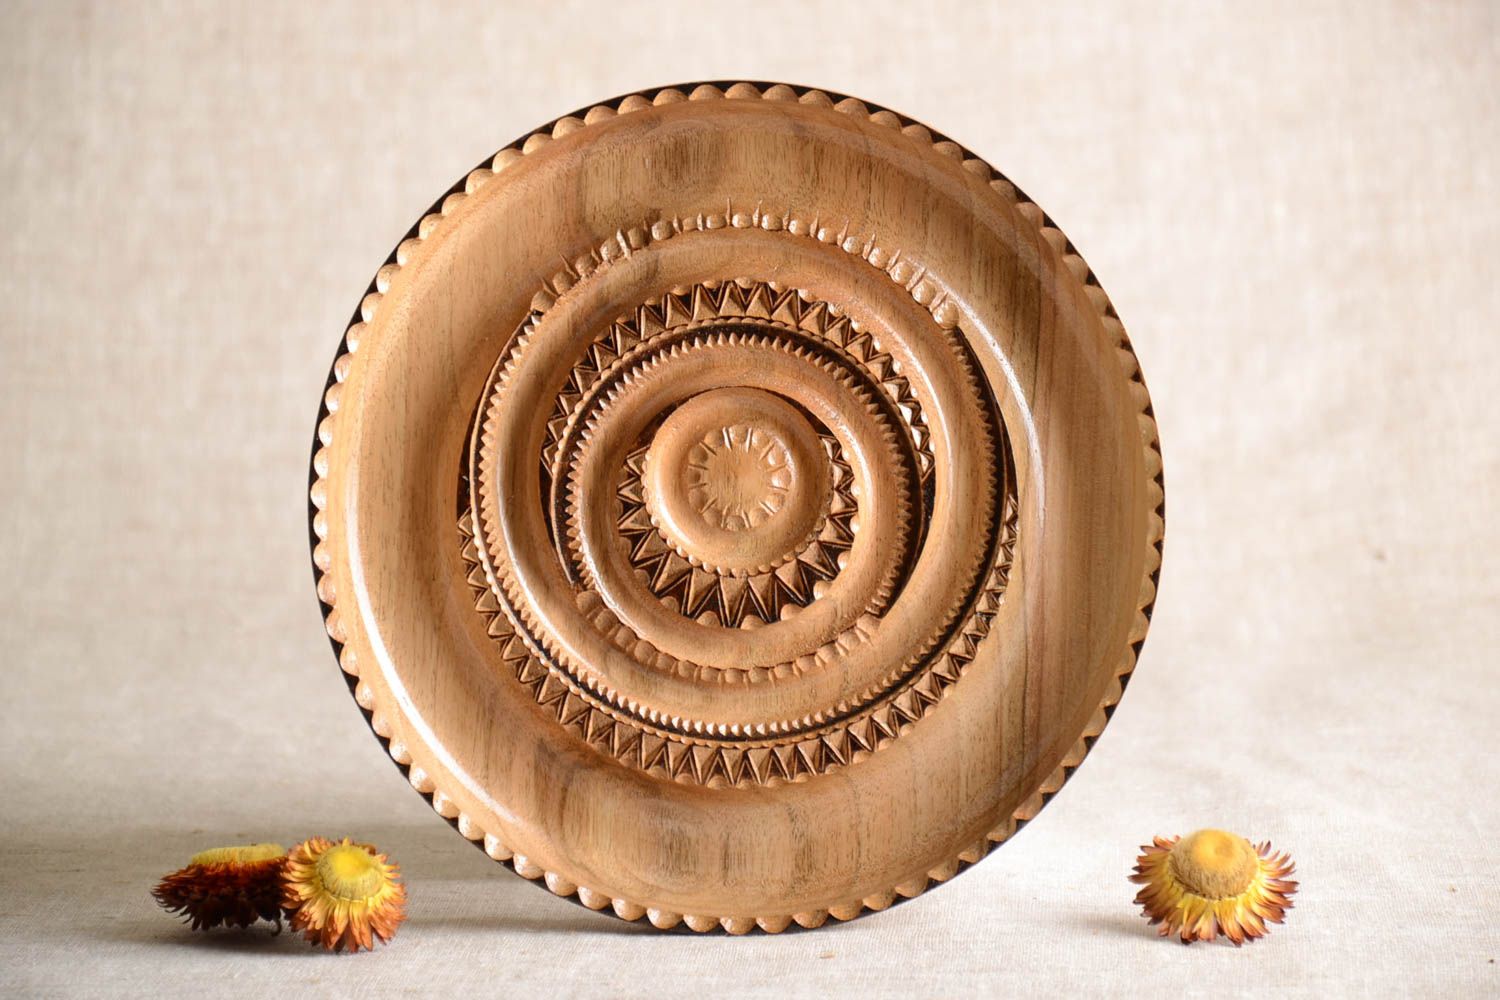 Plato decorativo de madera artesanal utensilio de cocina menaje del hogar foto 1